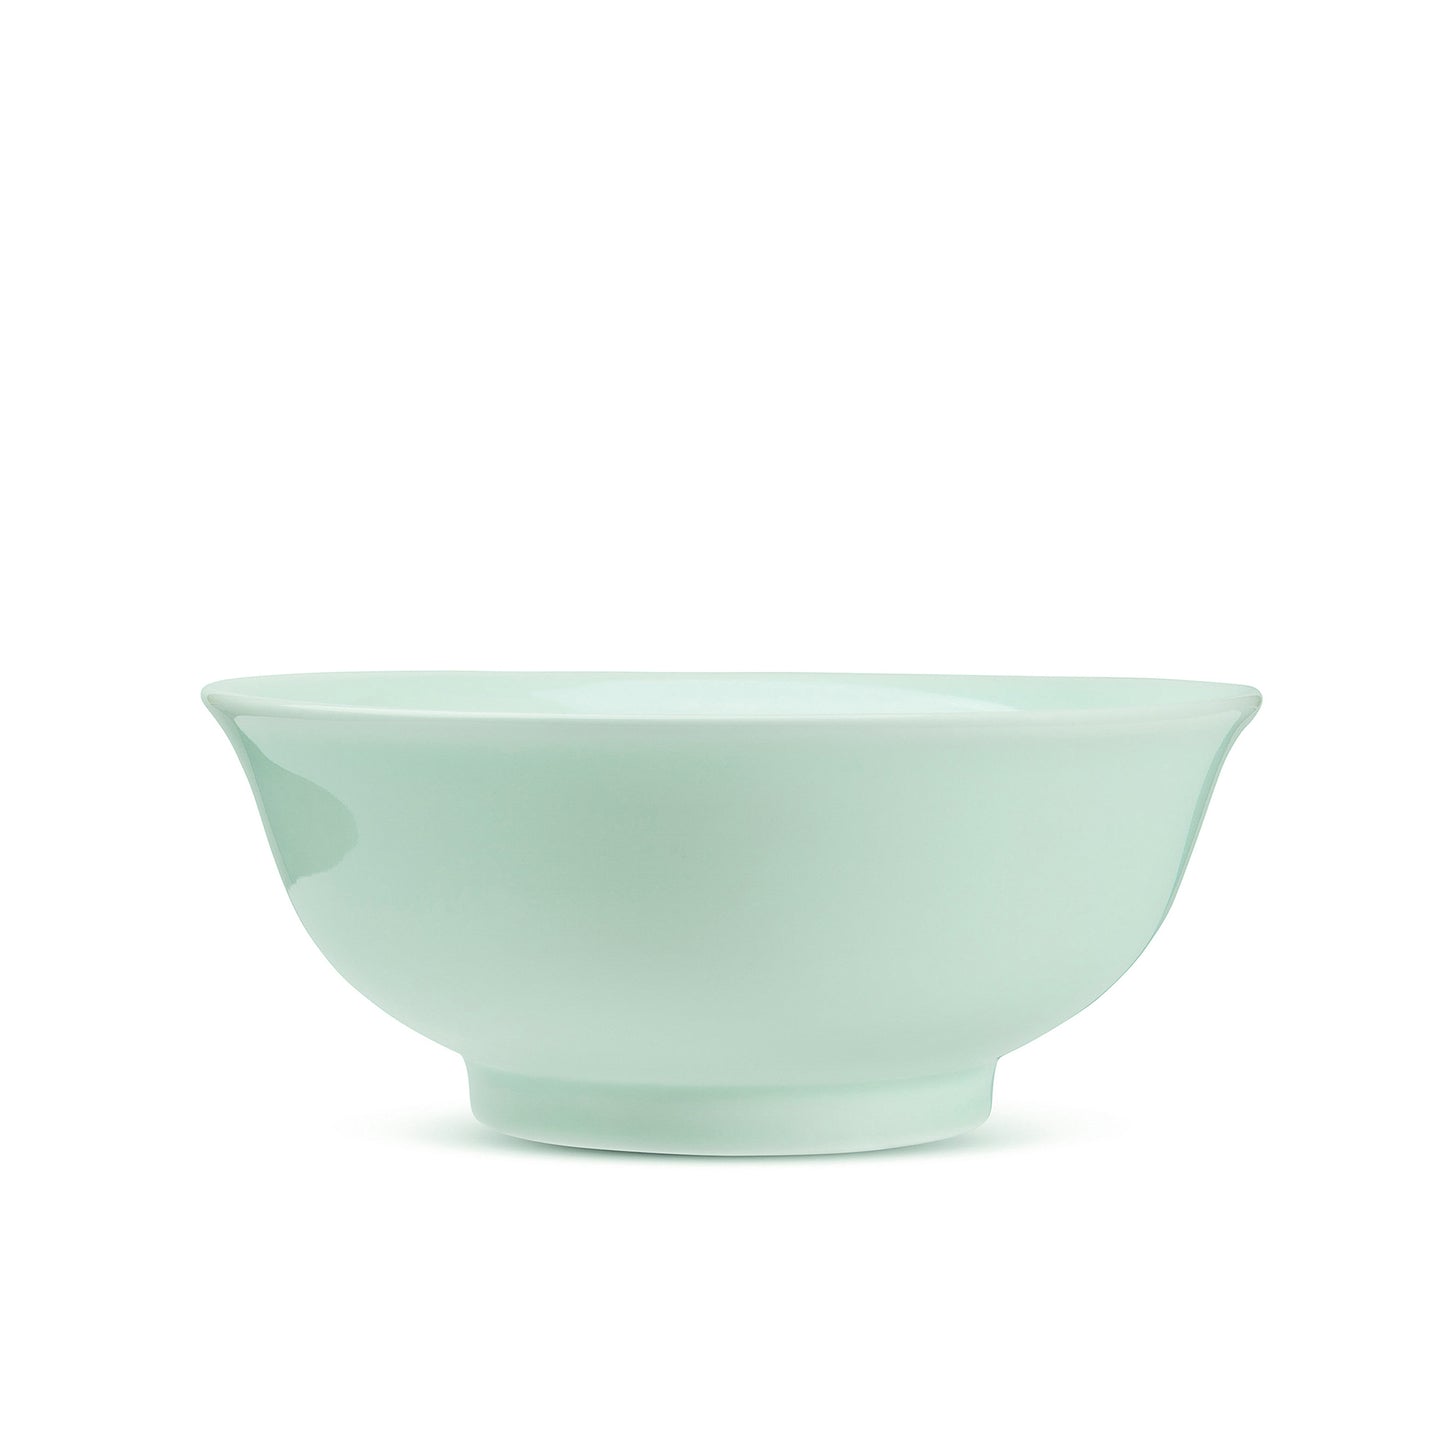 9" green celadon porcelain Zhengde bowl, Asian noodle bowl, serving bowl, front view, media 3 of 5